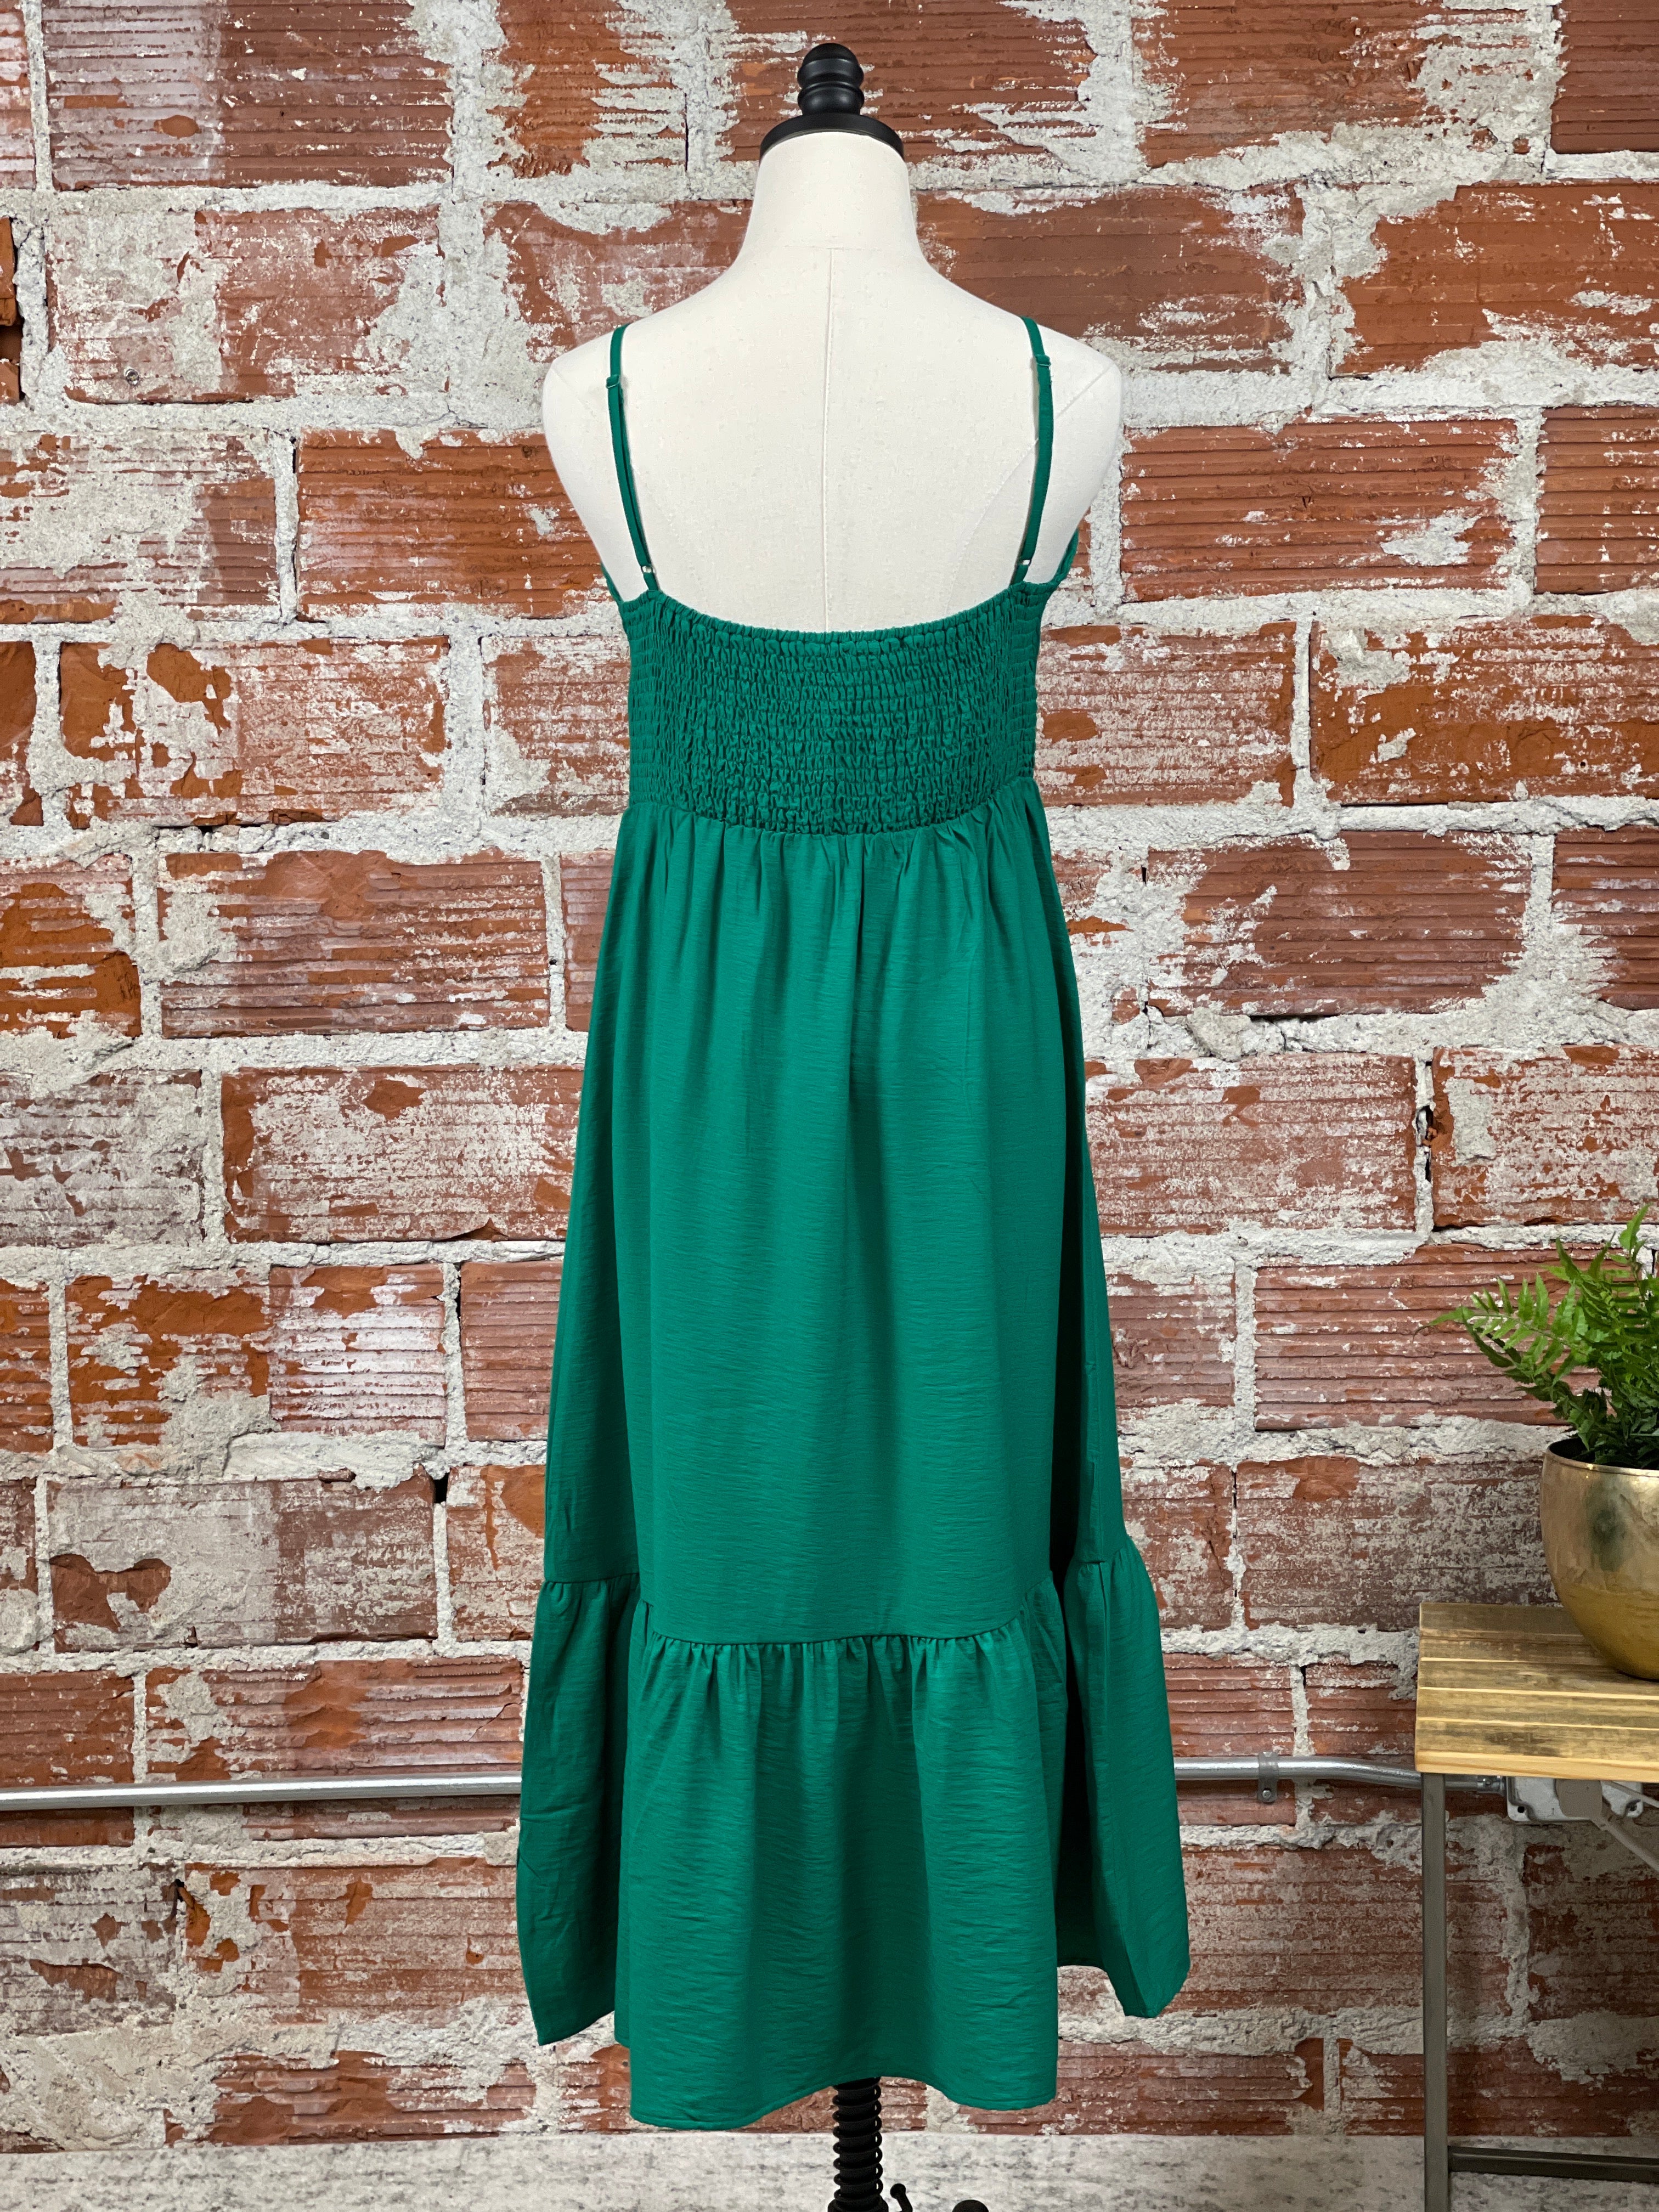 Apricot Emerald Forest Dress in Green-151 Dresses - Short-Little Bird Boutique